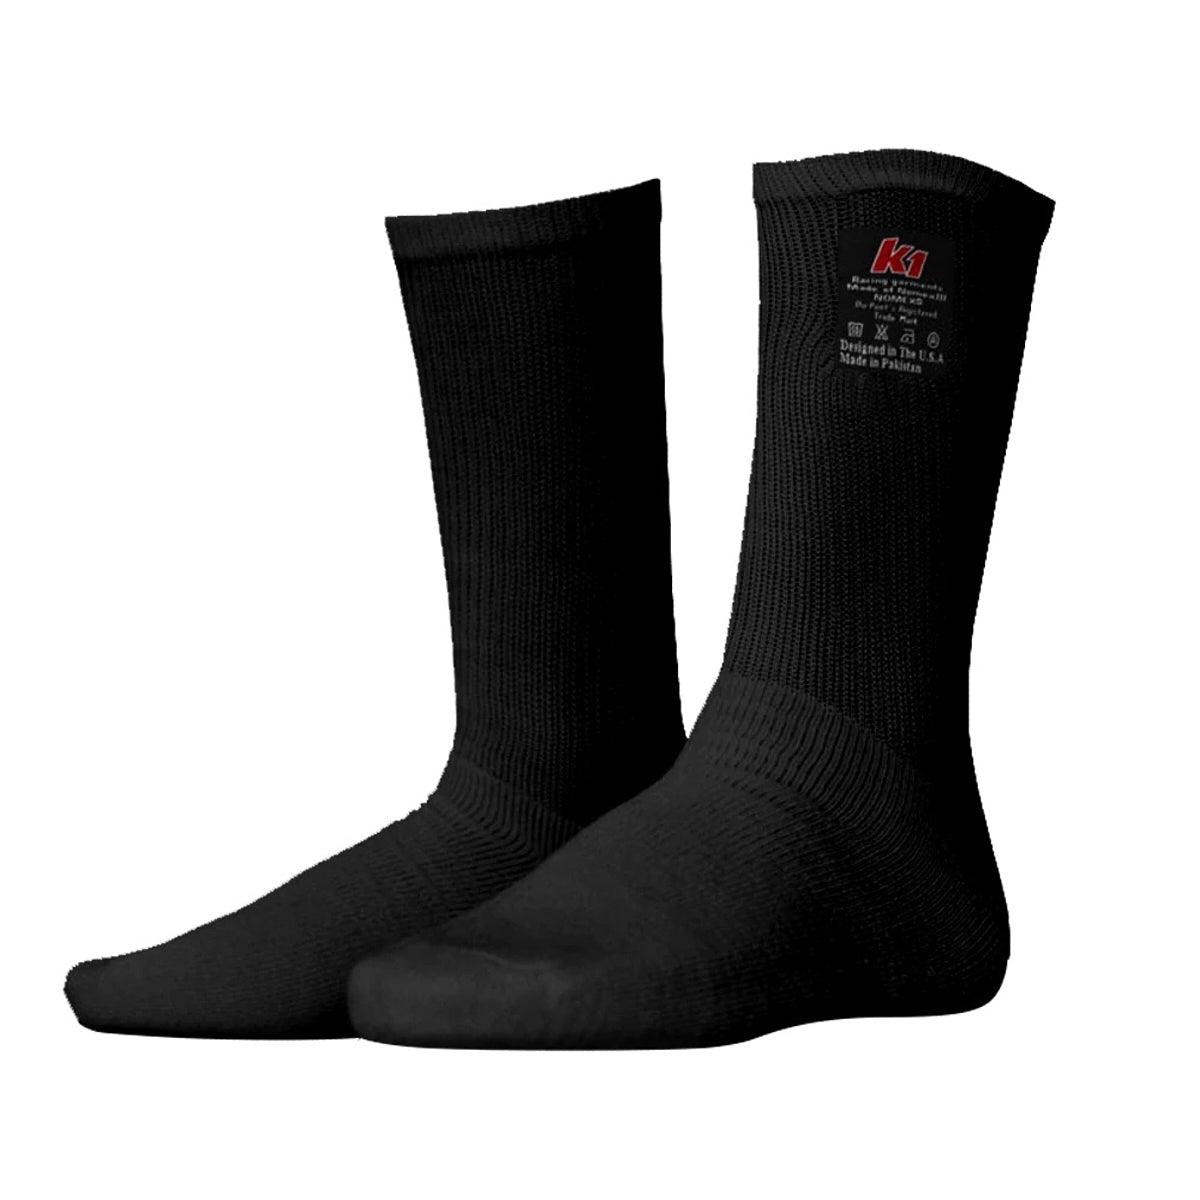 Socks Nomex K1 Black Large/X-Large - Burlile Performance Products